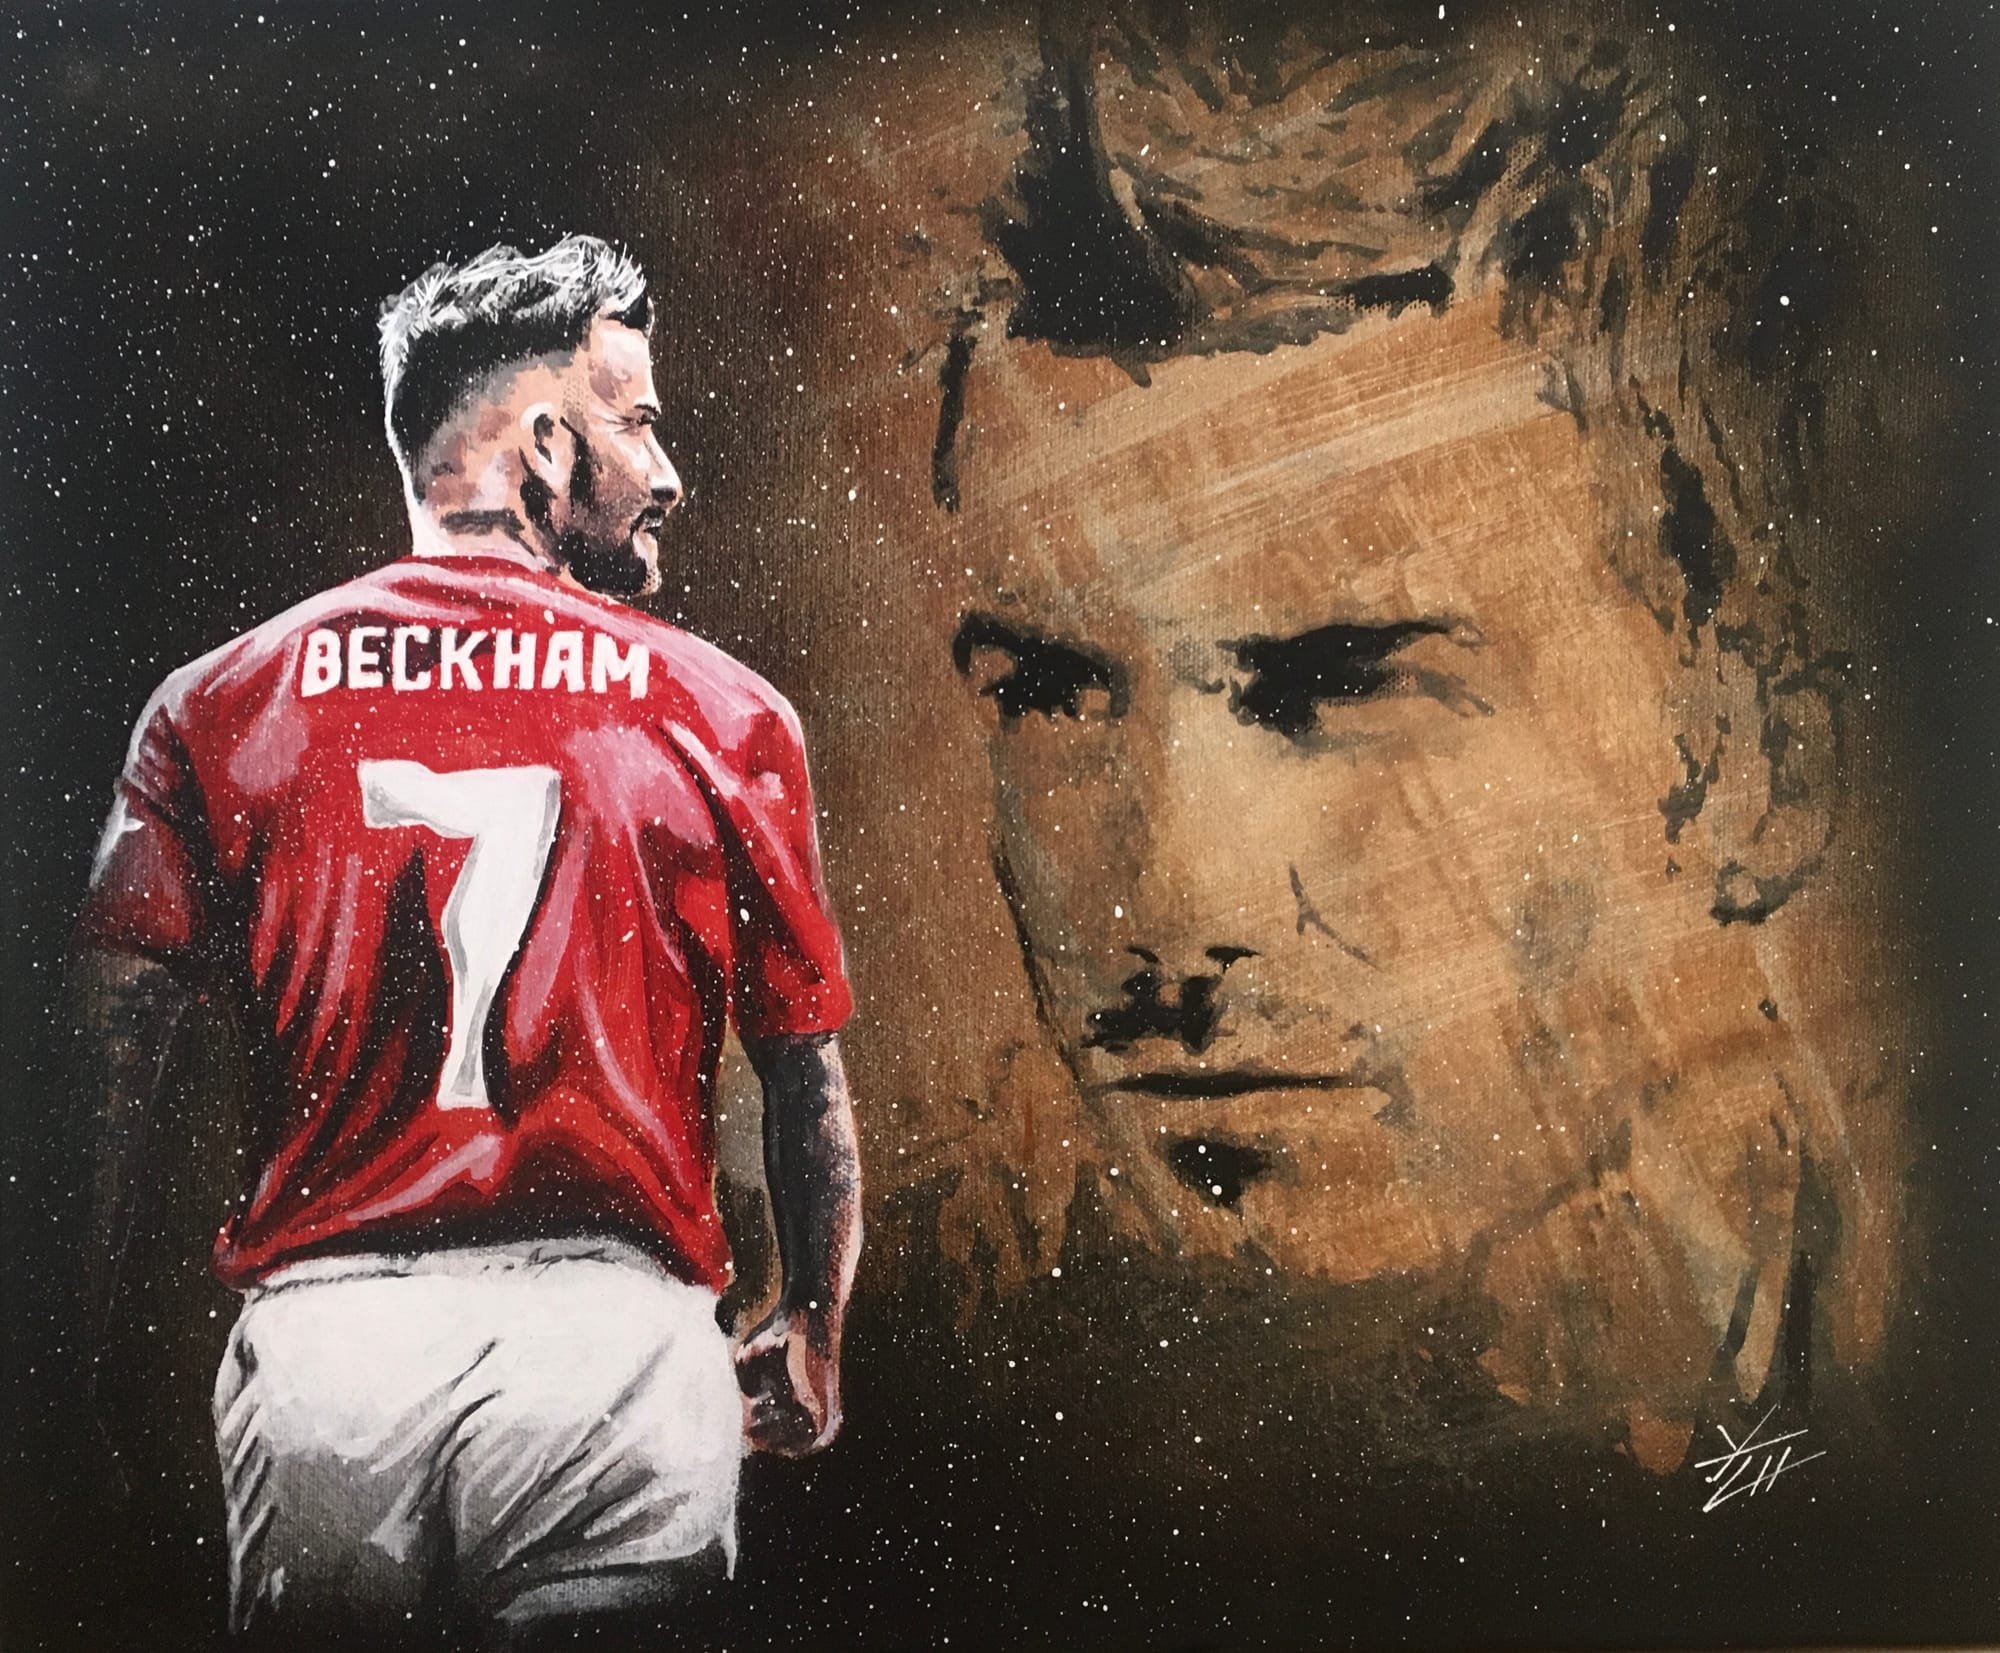 David Beckham - the spice boy